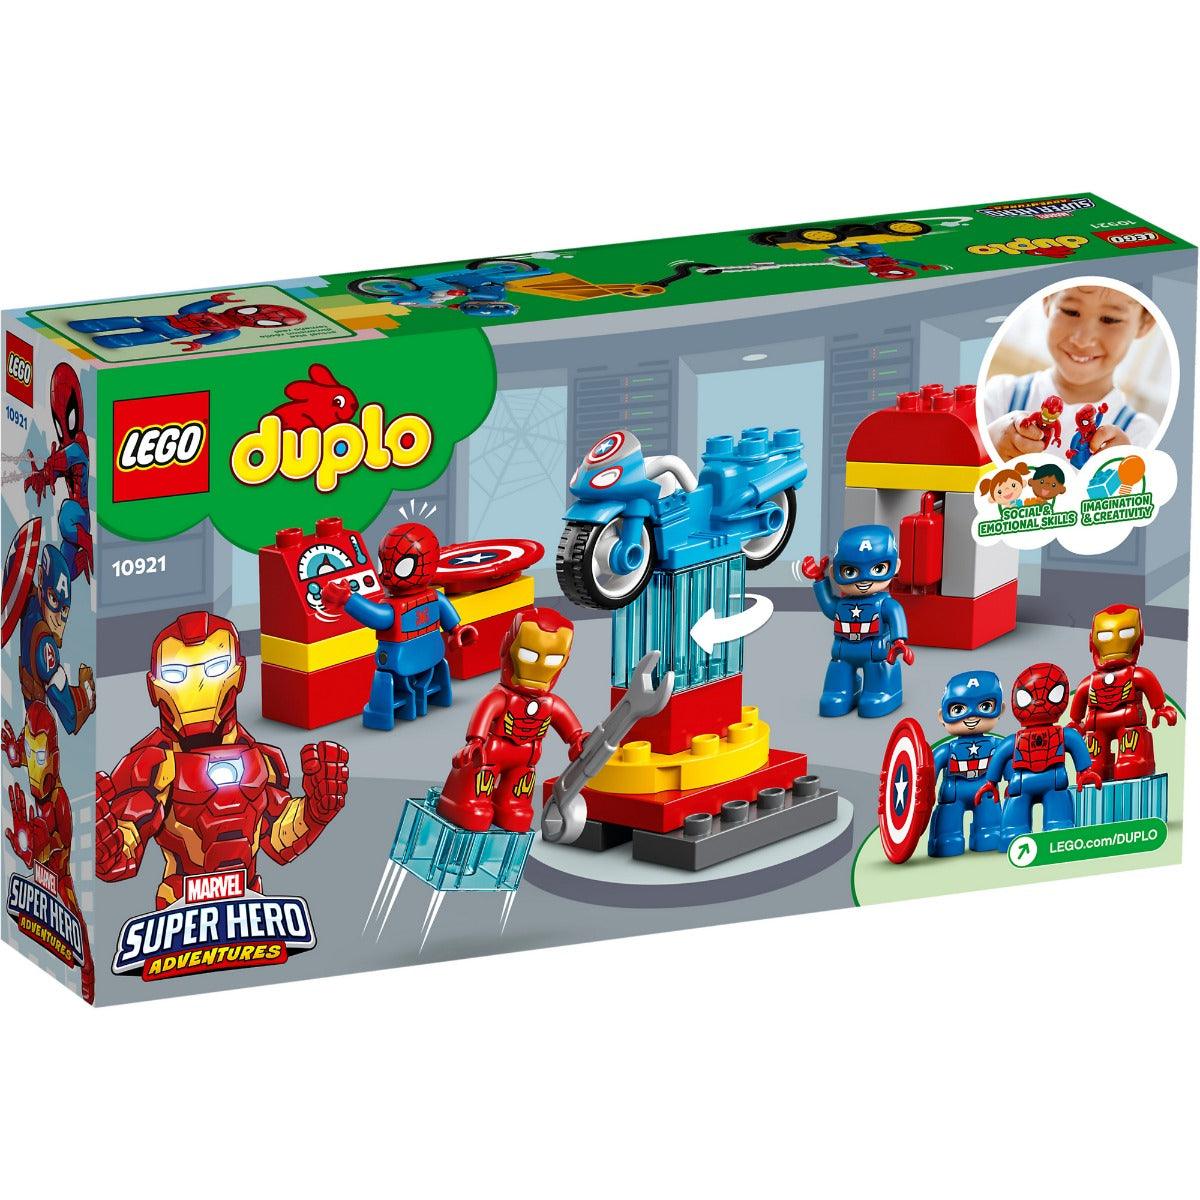 LEGO Duplo Super Heroes Lab